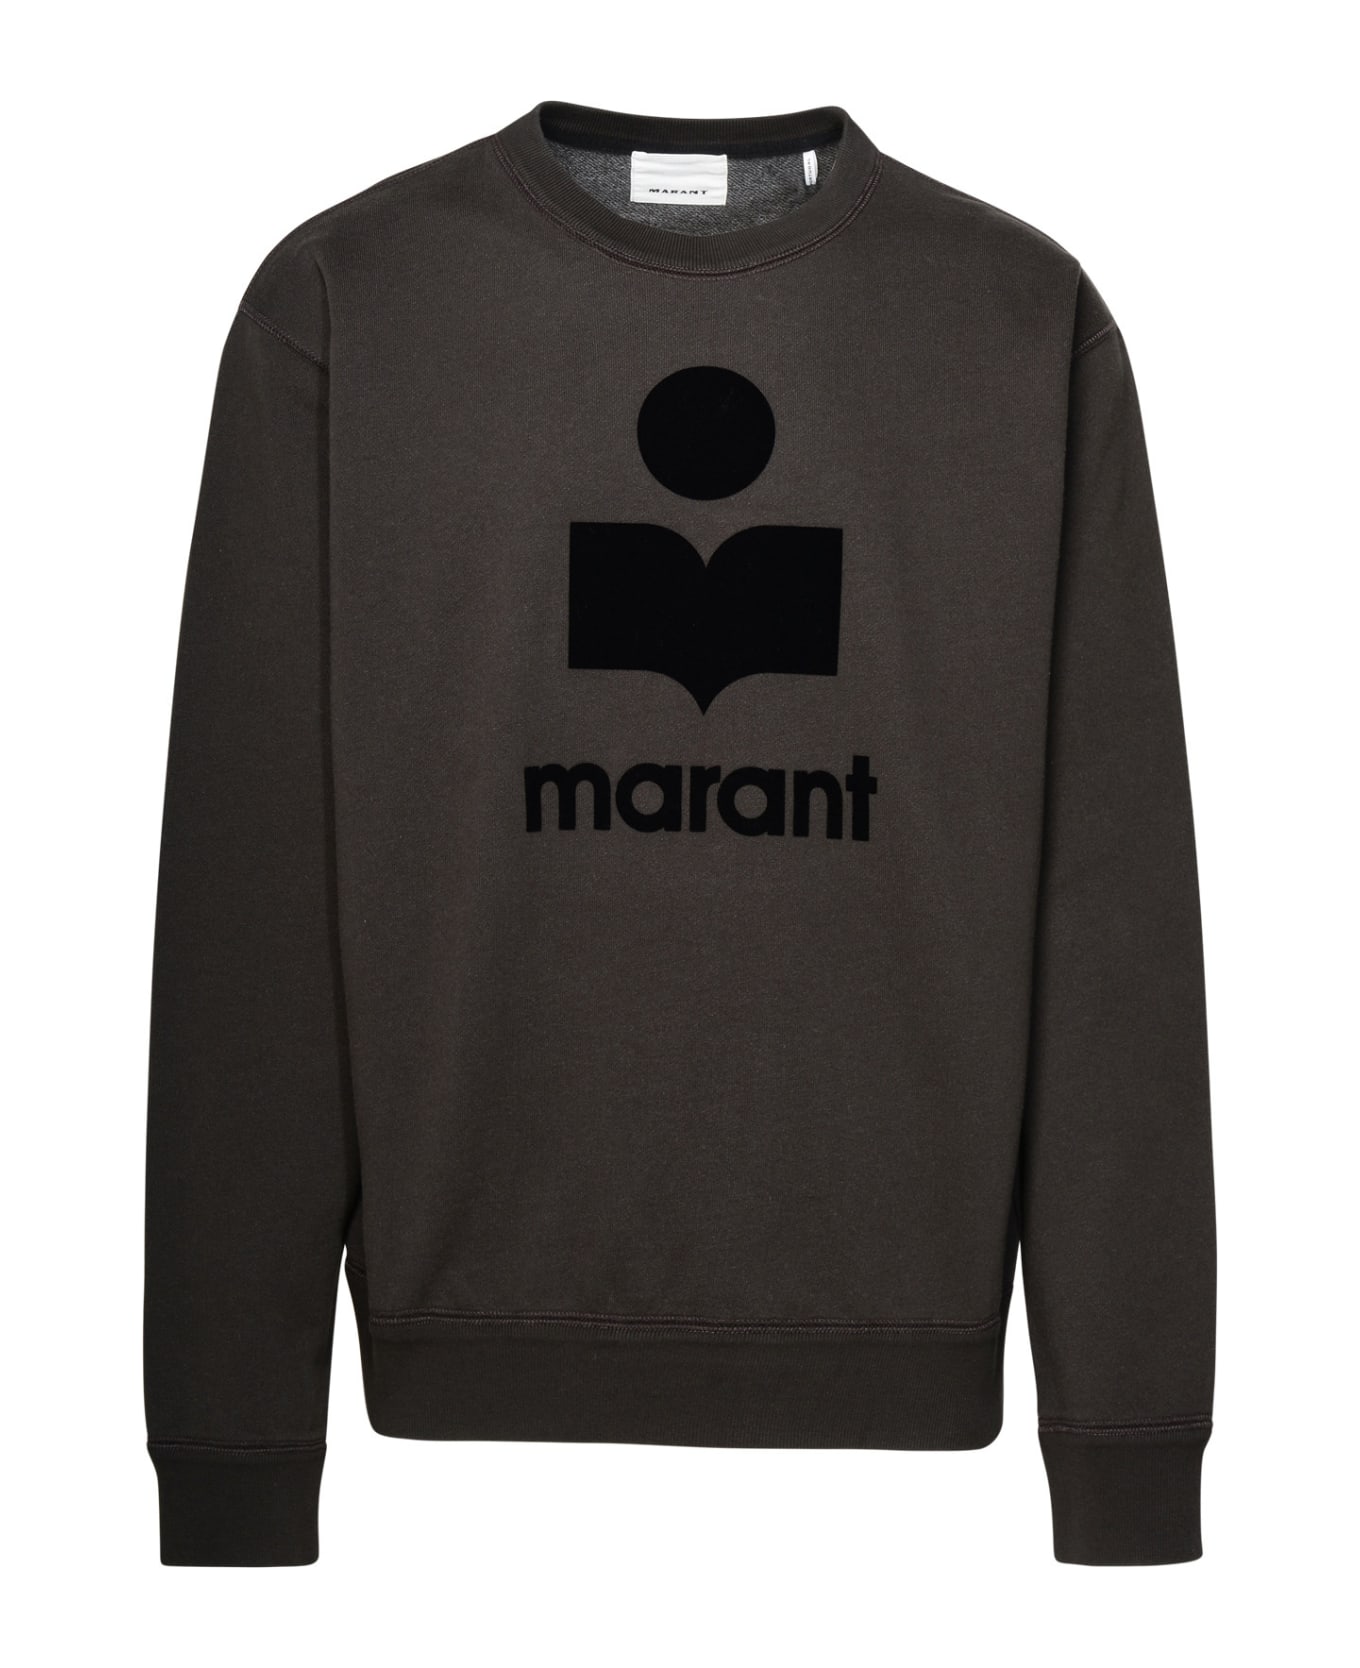 Isabel Marant Black Cotton Blend Sweatshirt - Black